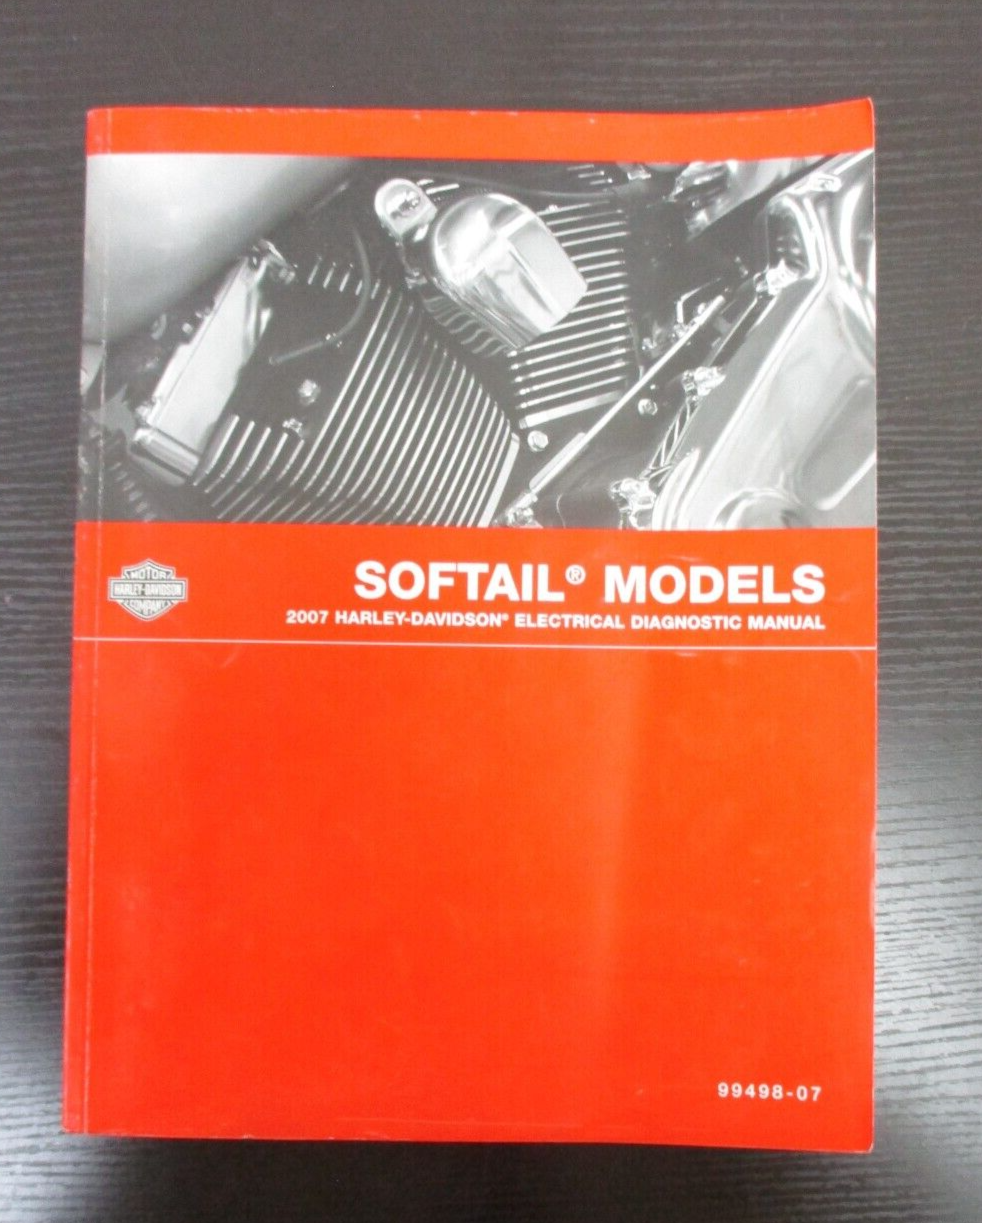 Harley-Davidson  Softail Models 2007 Electrical Diagnostic Manual 99498-07